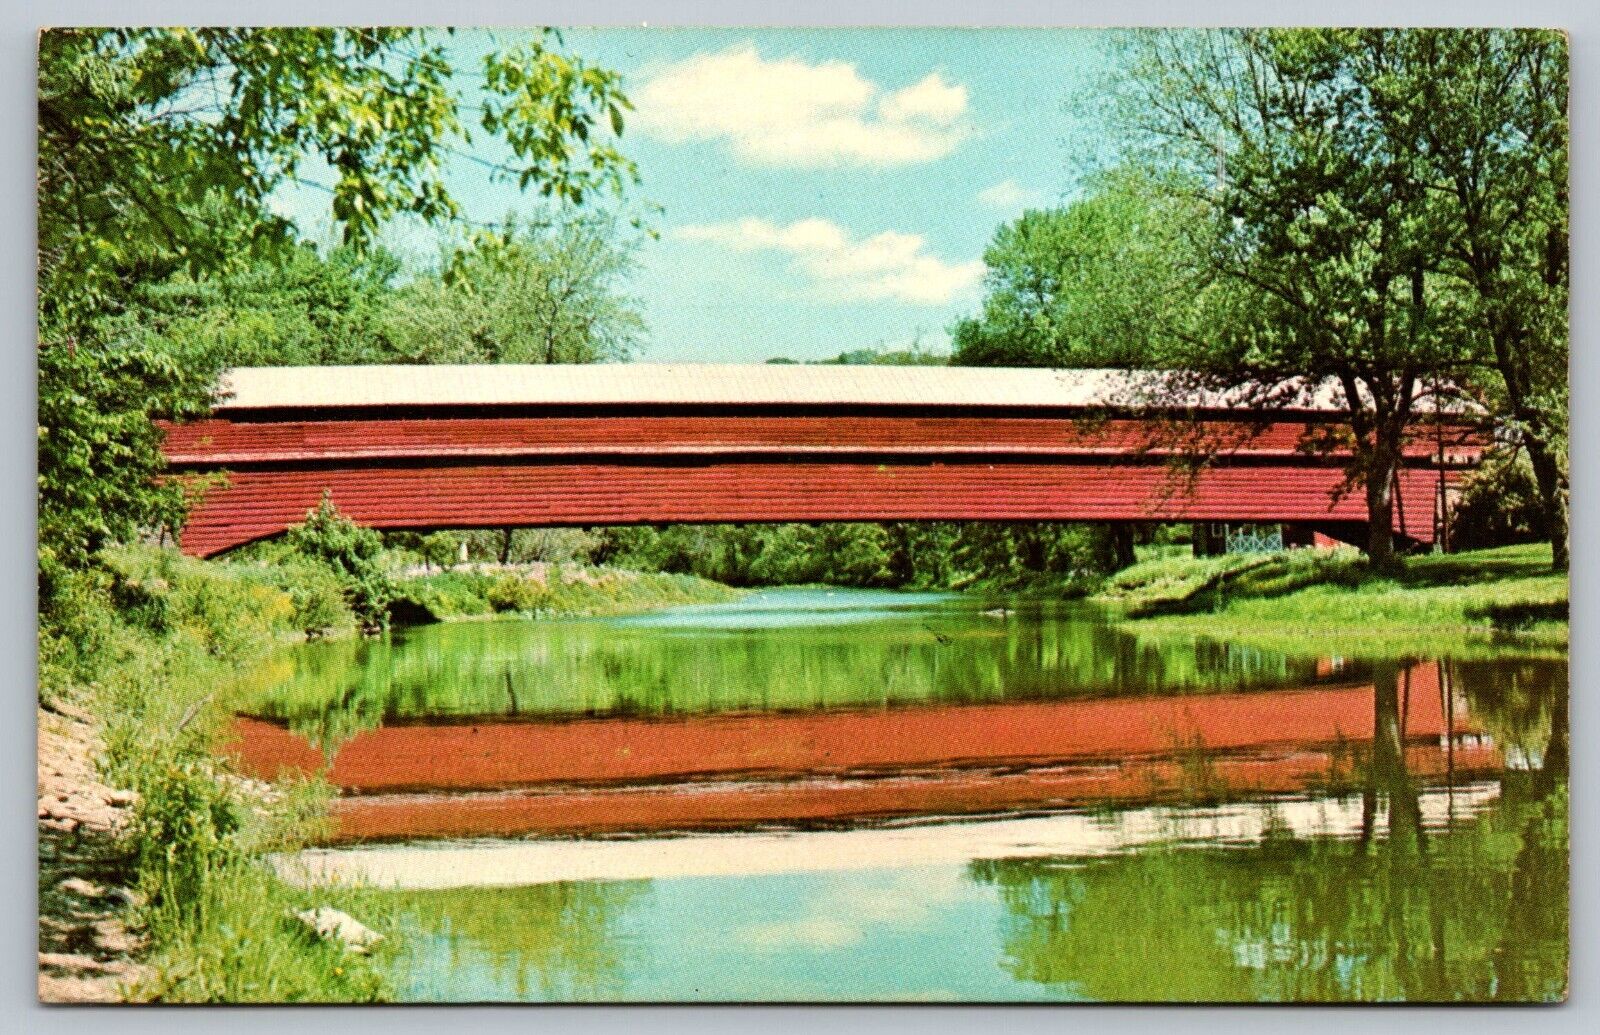 Postcard - Covered Bridge - Dreibelbis Station Bridge, Pennsylvania